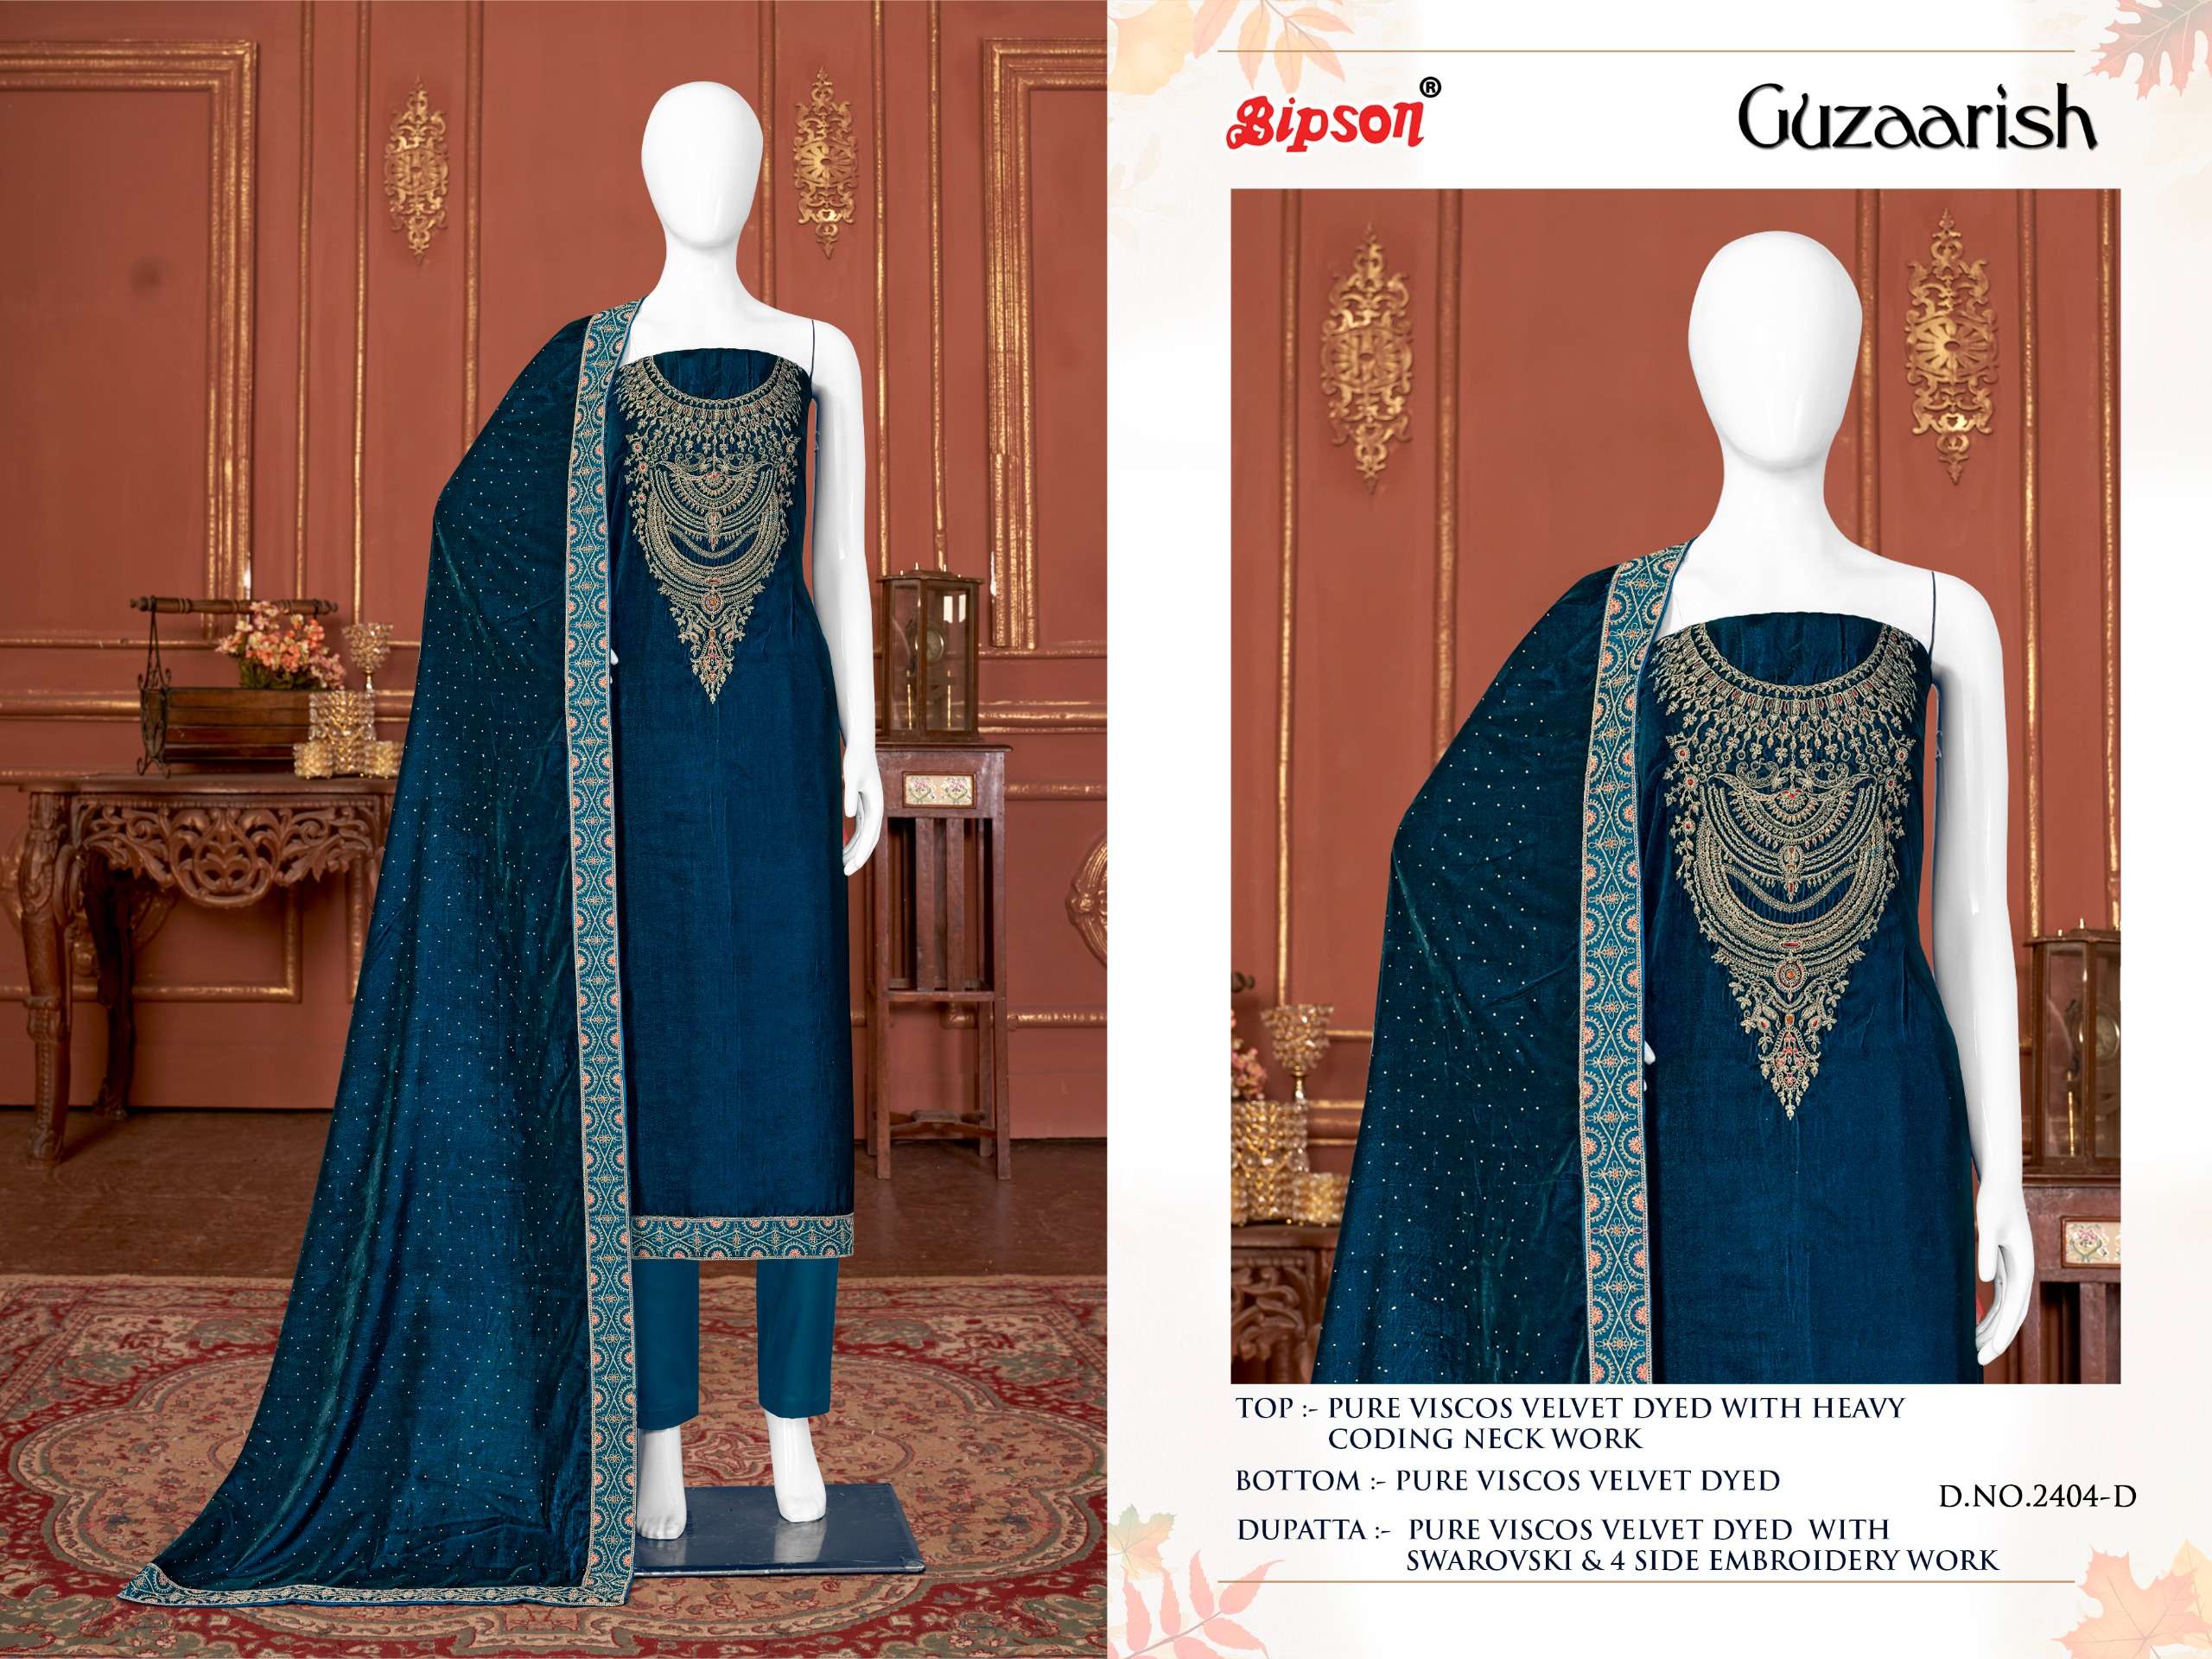 bipson guzaarish 2404 colour series designer pakistani salwar kameez wholesaler surat